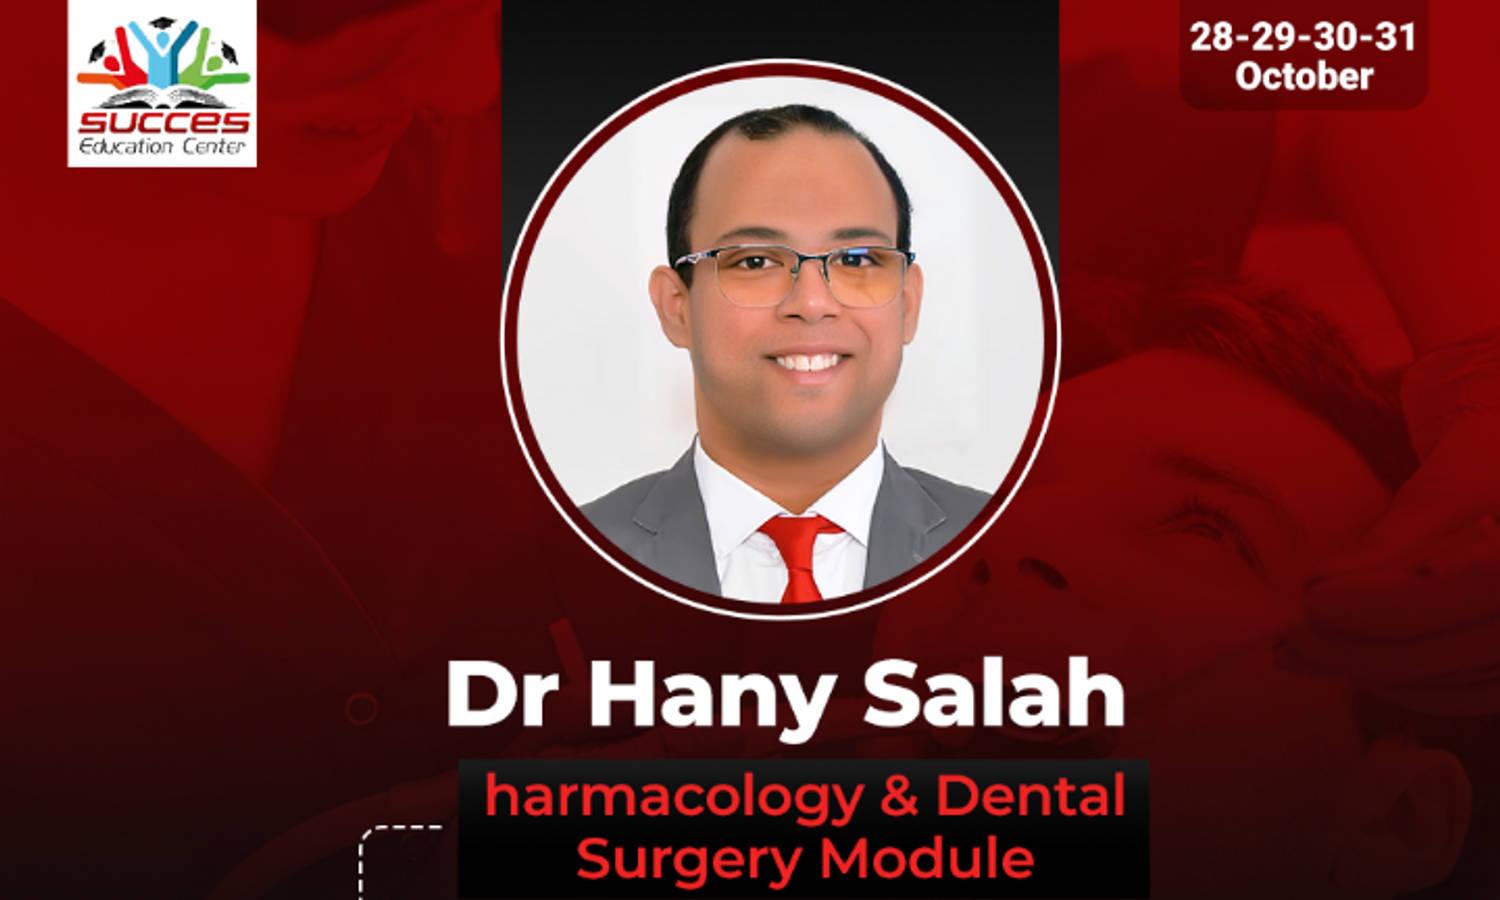 Success Pharmacology & Dental Surgery Module